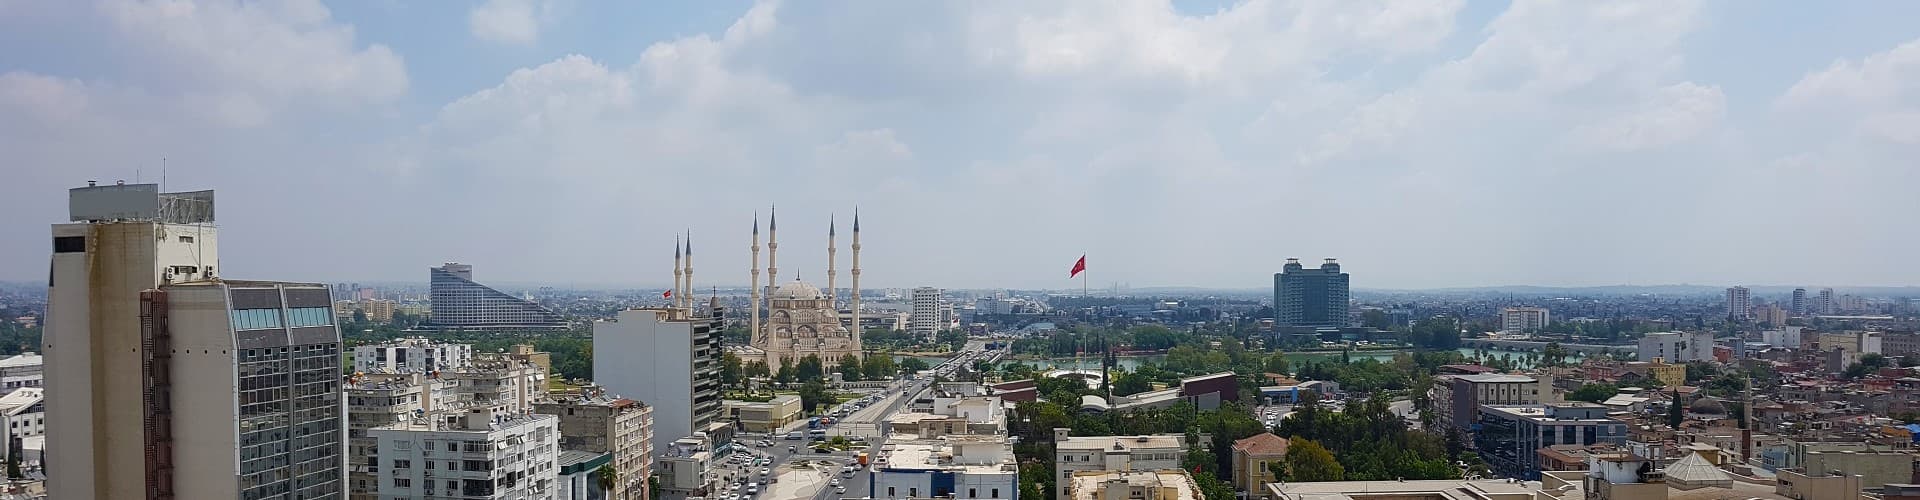 Adana Skyline